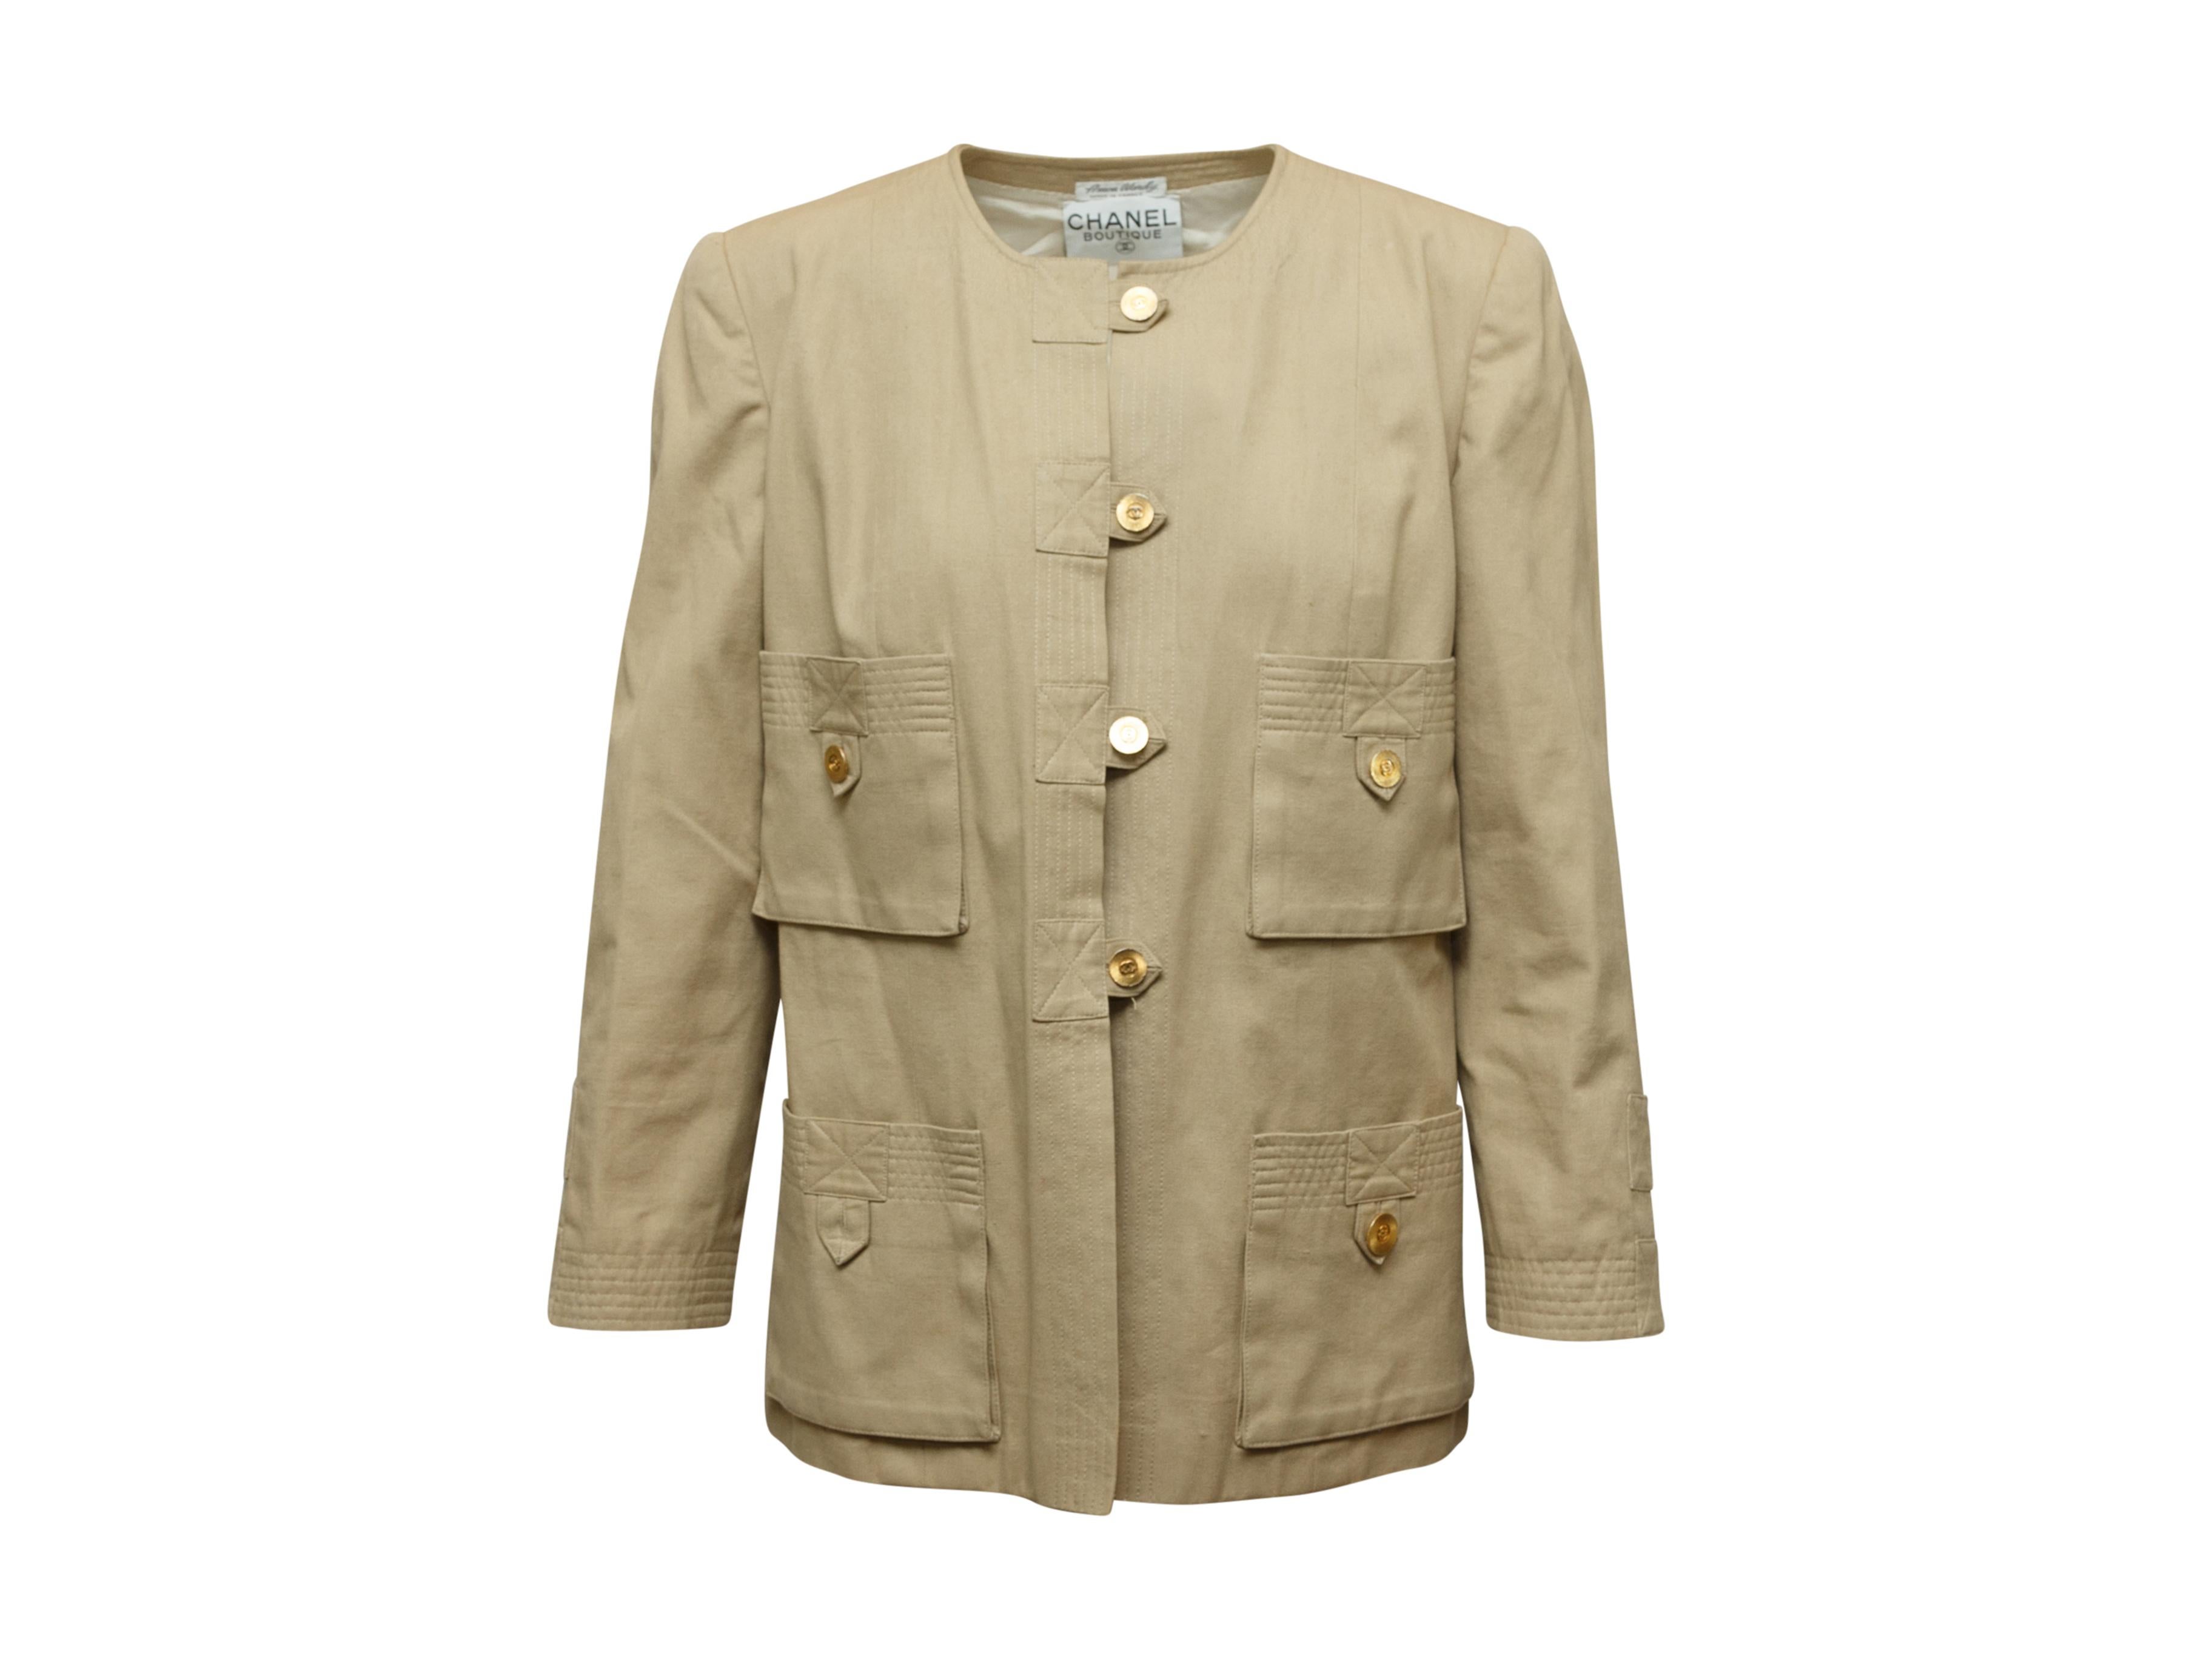 Product details: Vintage tan canvas jacket by Chanel Boutique. Crew neck. Four pockets. Gold-tone CC button closures at front. 38